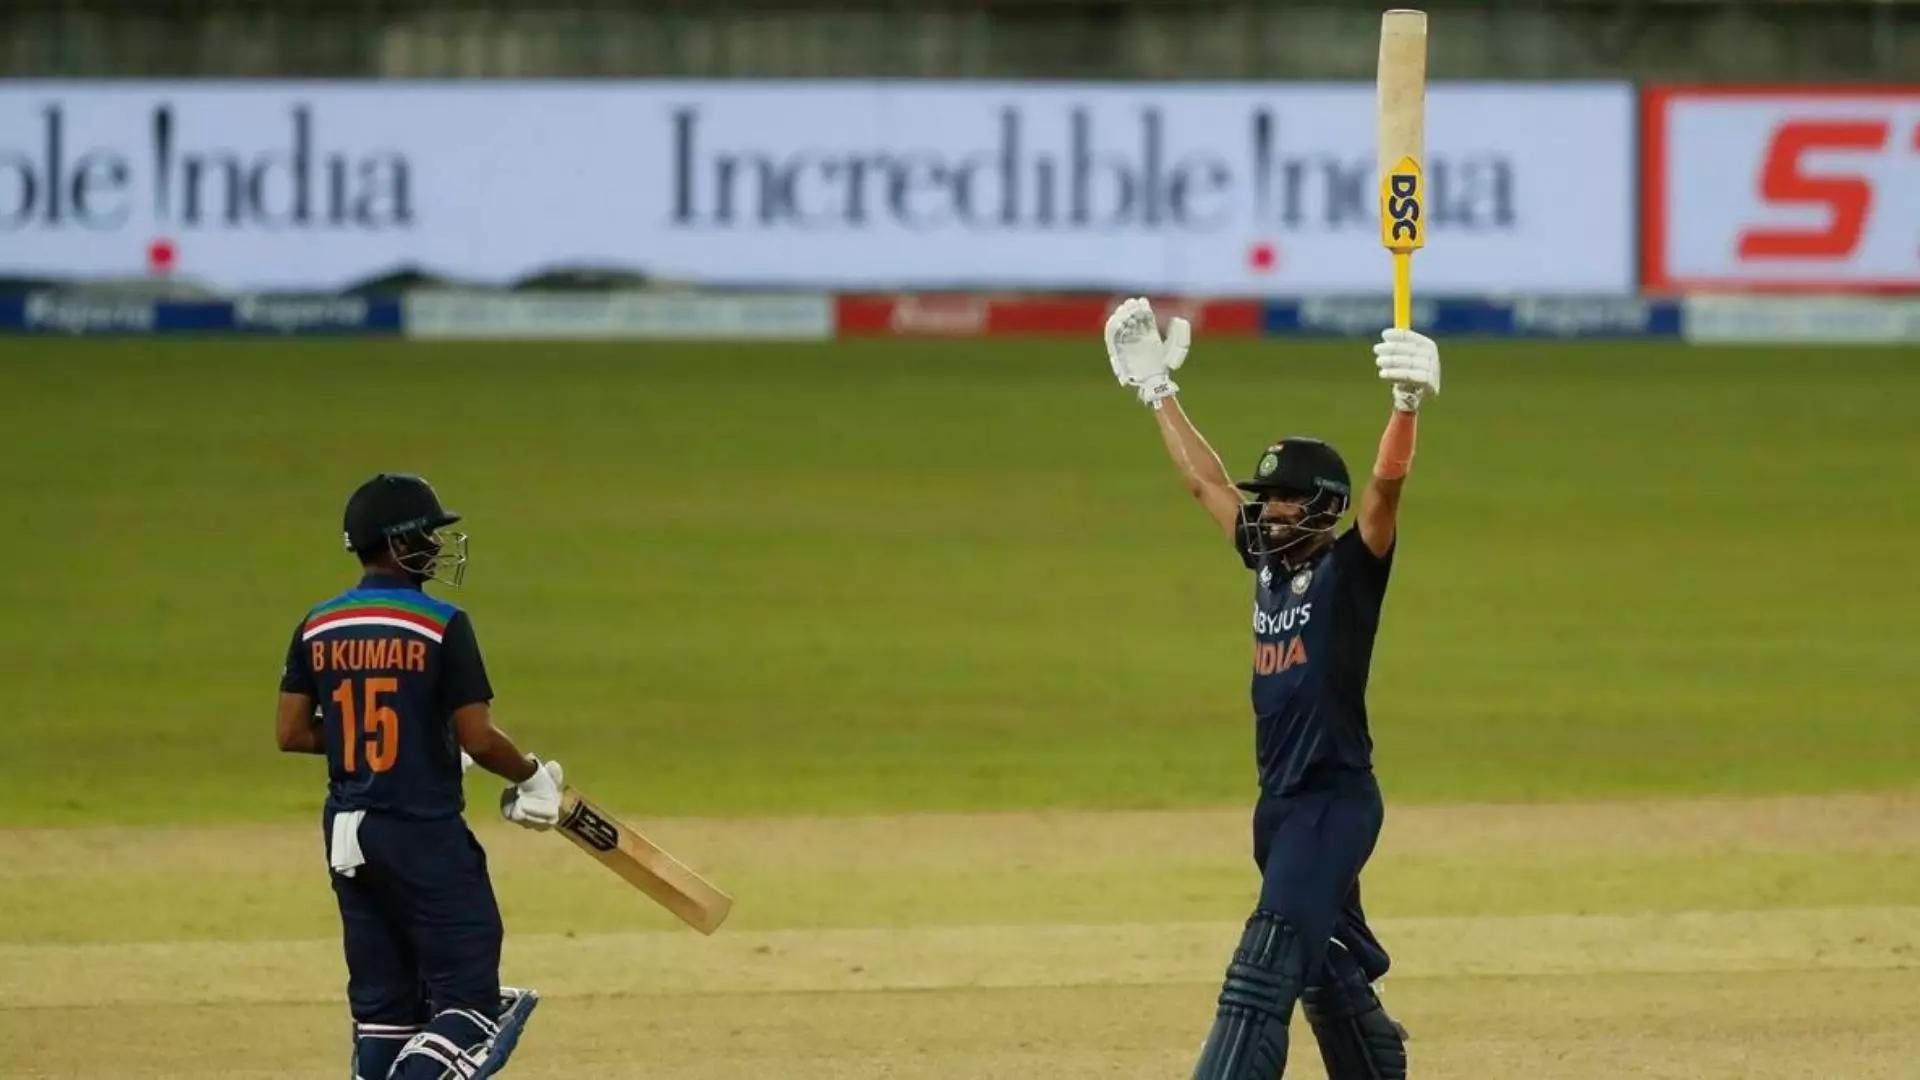 India Won The Match Against Sri lanka in Second ODI